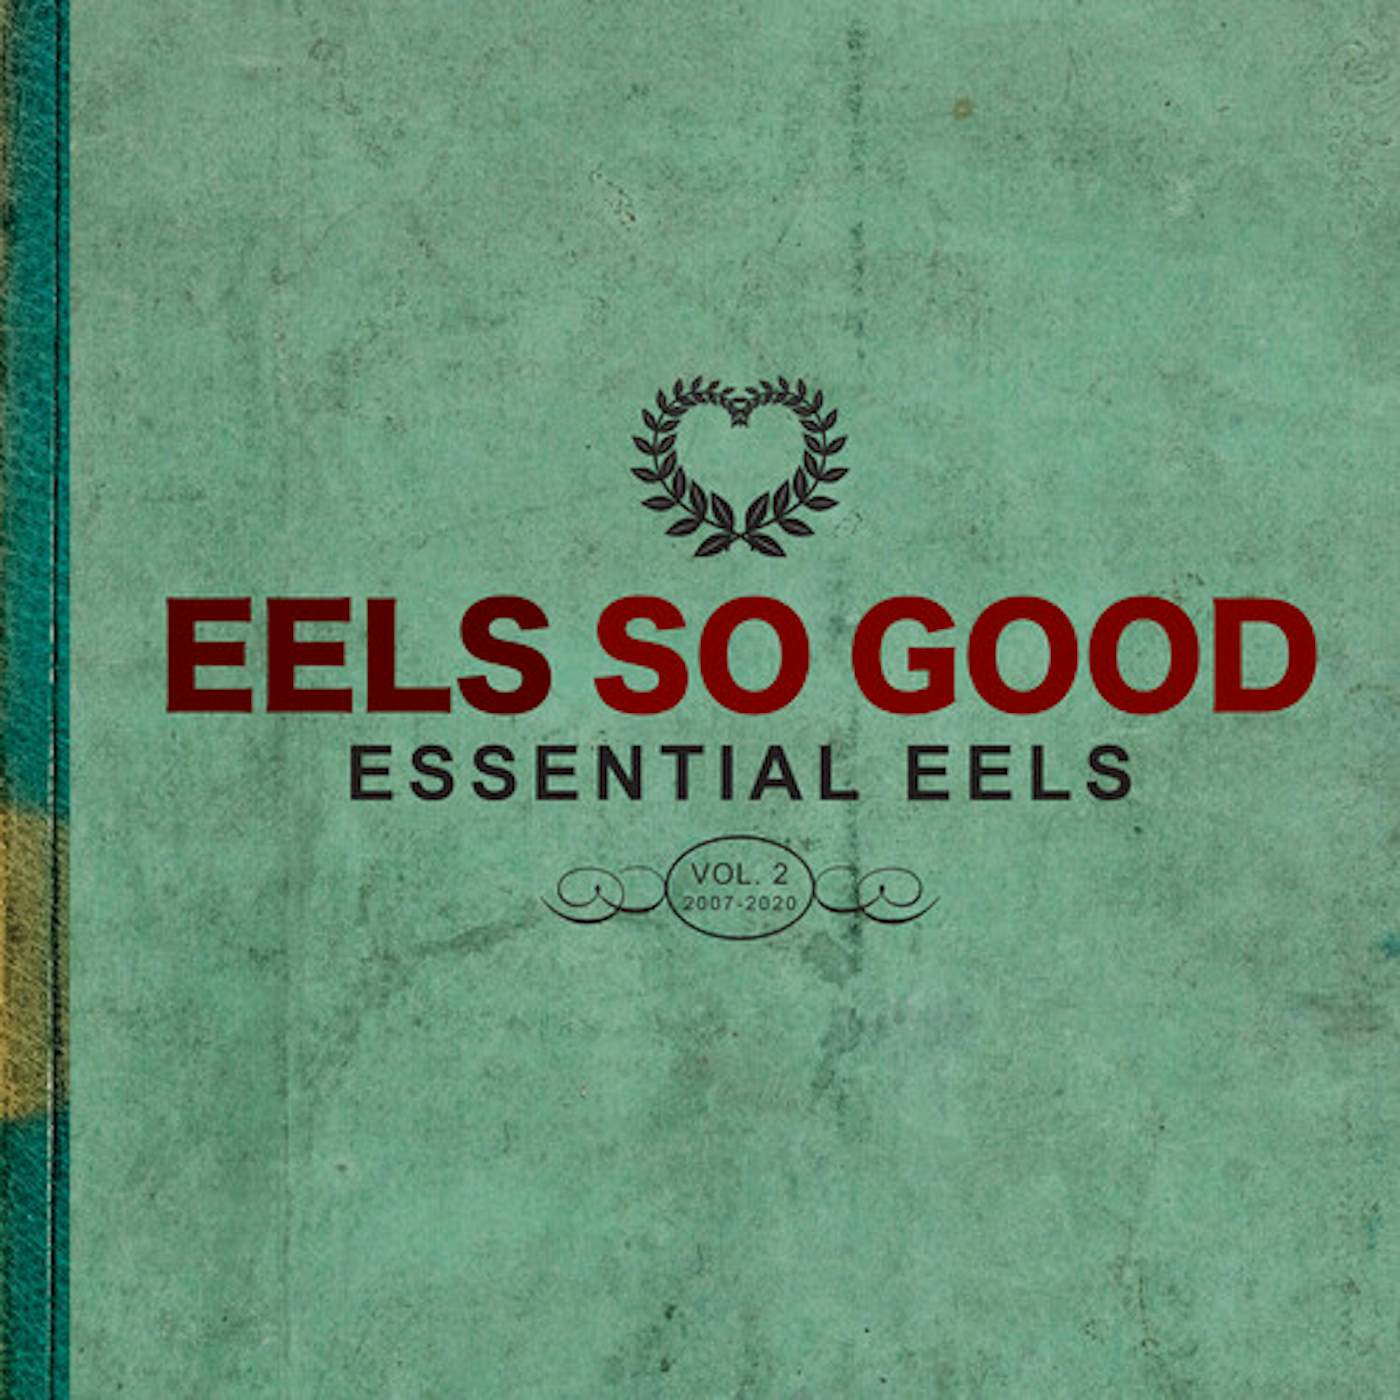 EELS SO GOOD: ESSENTIAL EELS VOL. 2 (2007-2020) CD